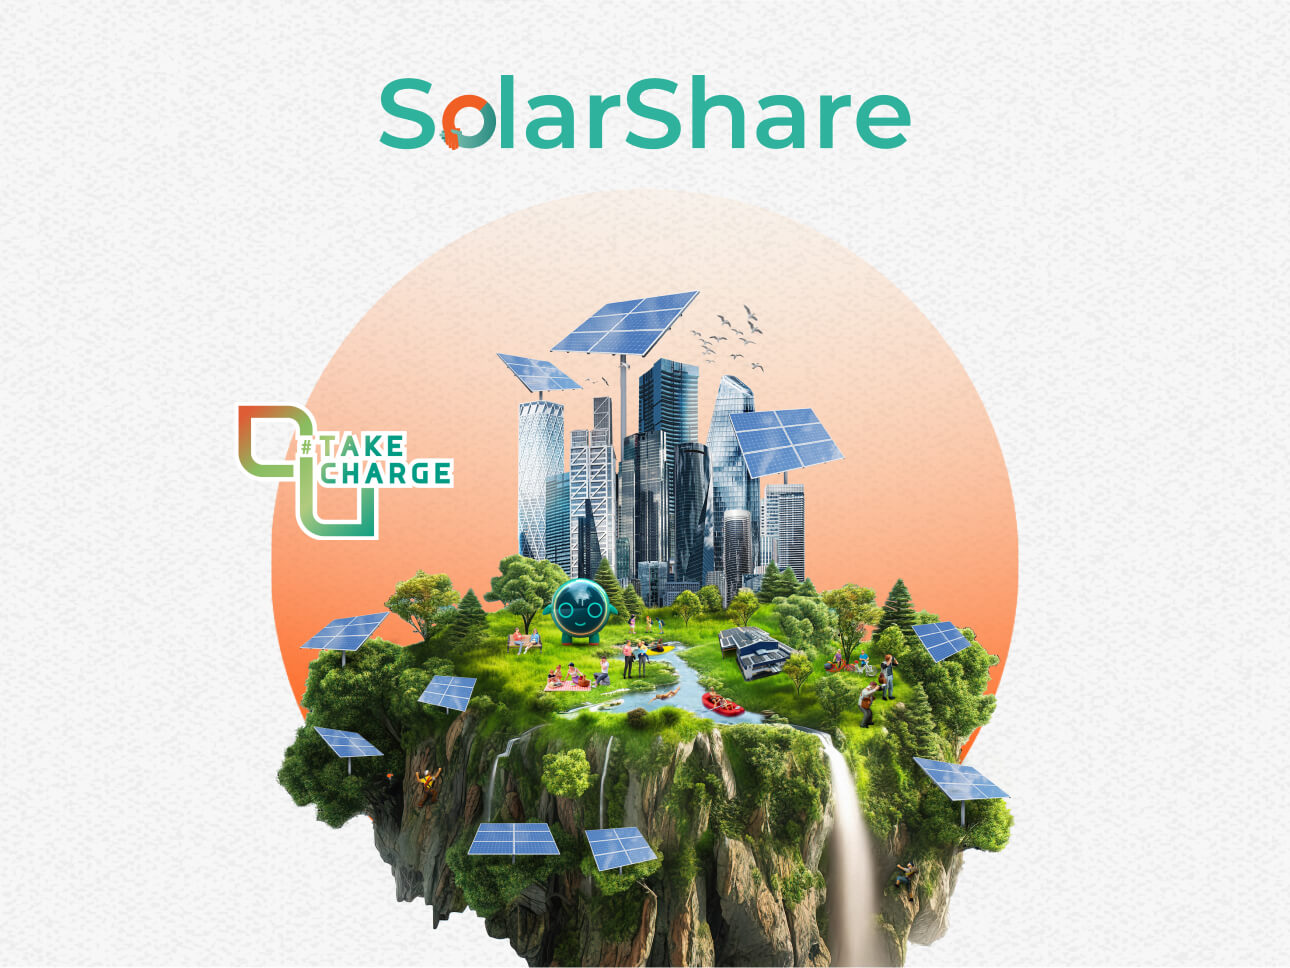 Sell solar energy conveniently on SolarShare 